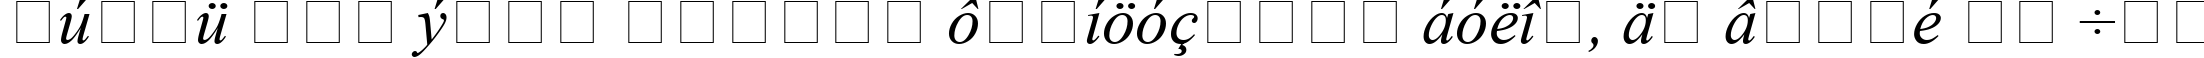 Пример написания шрифтом Times New Roman CE Italic текста на русском